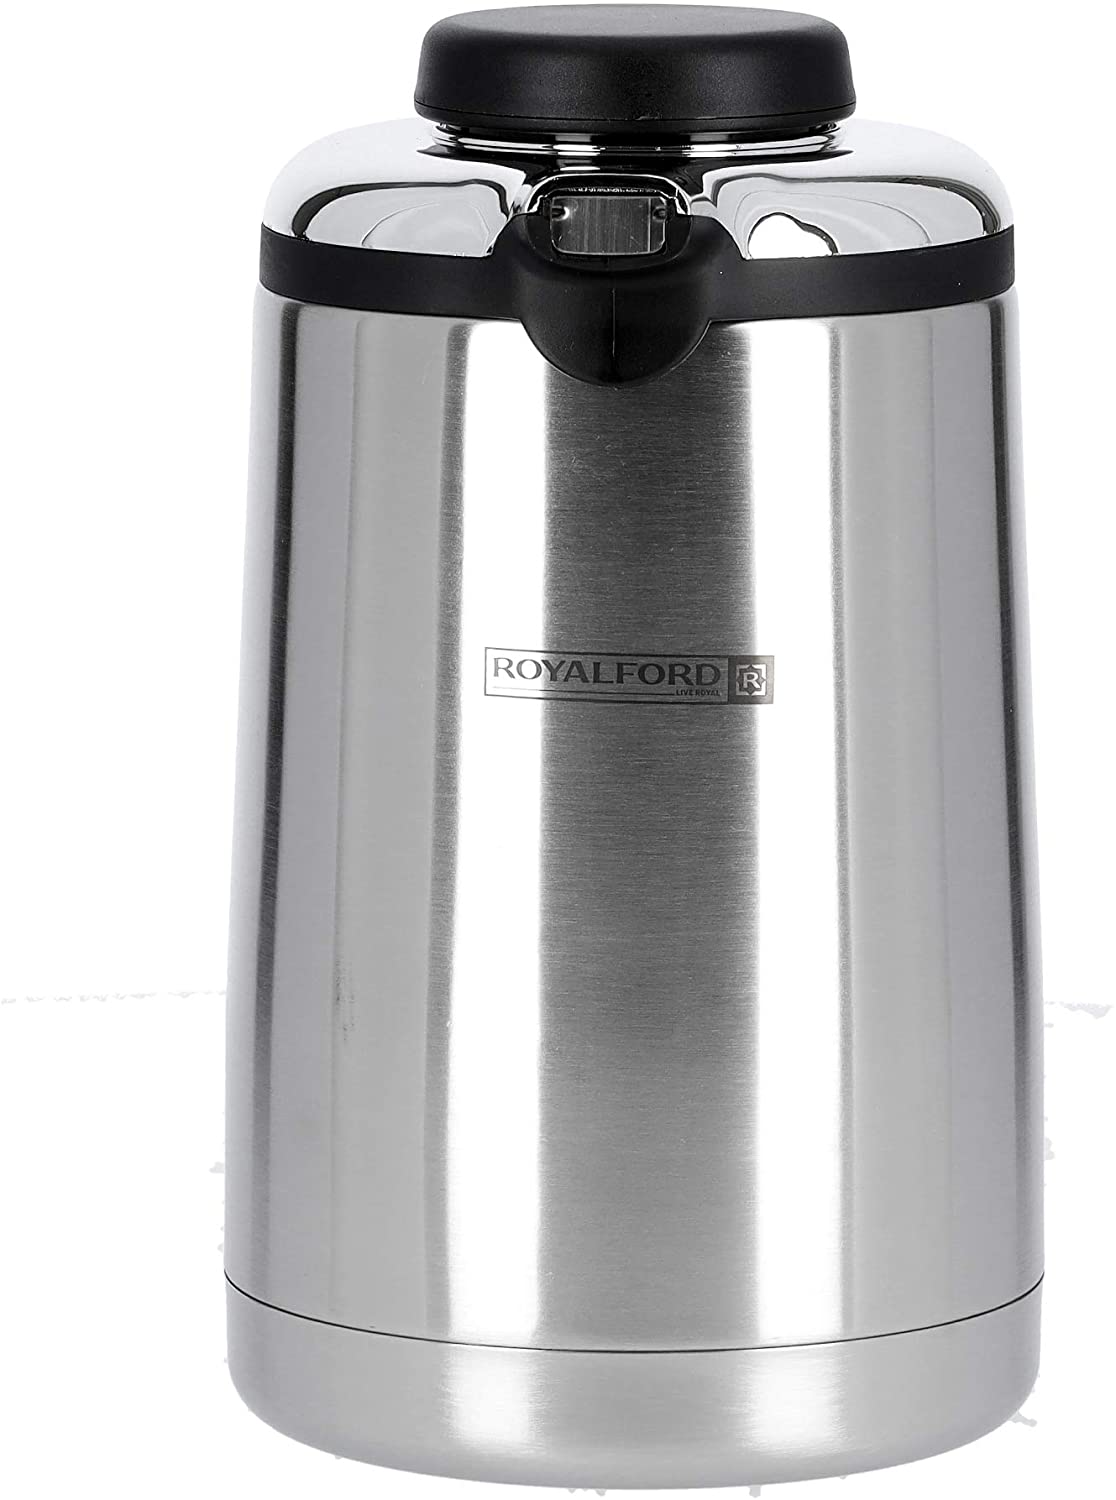 Royalford Stainless Steel Vacuum Flask 1.6L Black & Silver